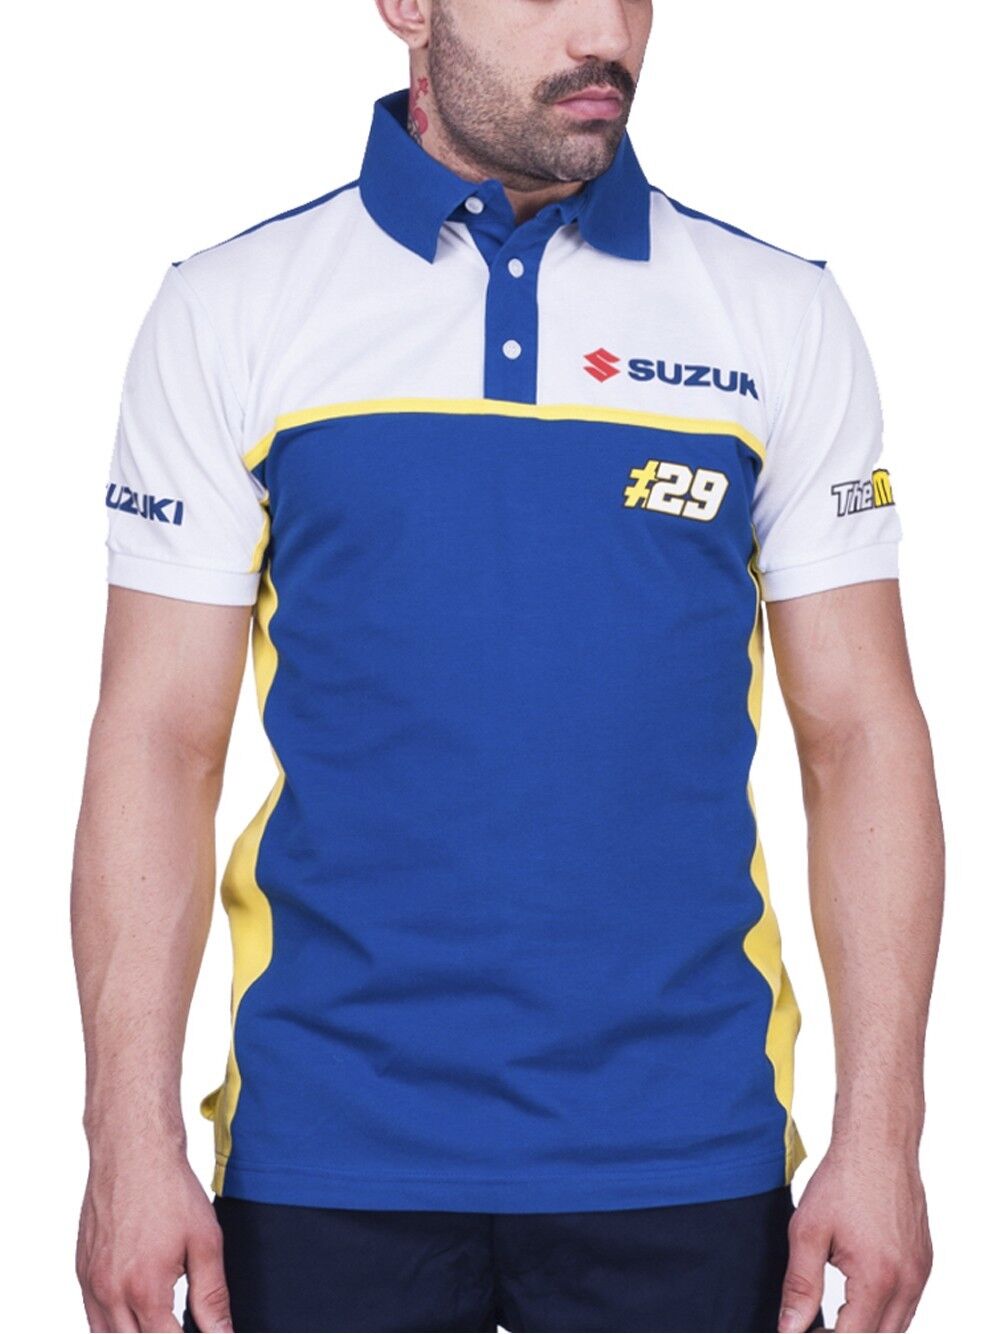 New Official Andrea Ianonne 29 Dual Suzuki Polo Shirt - 17 39008